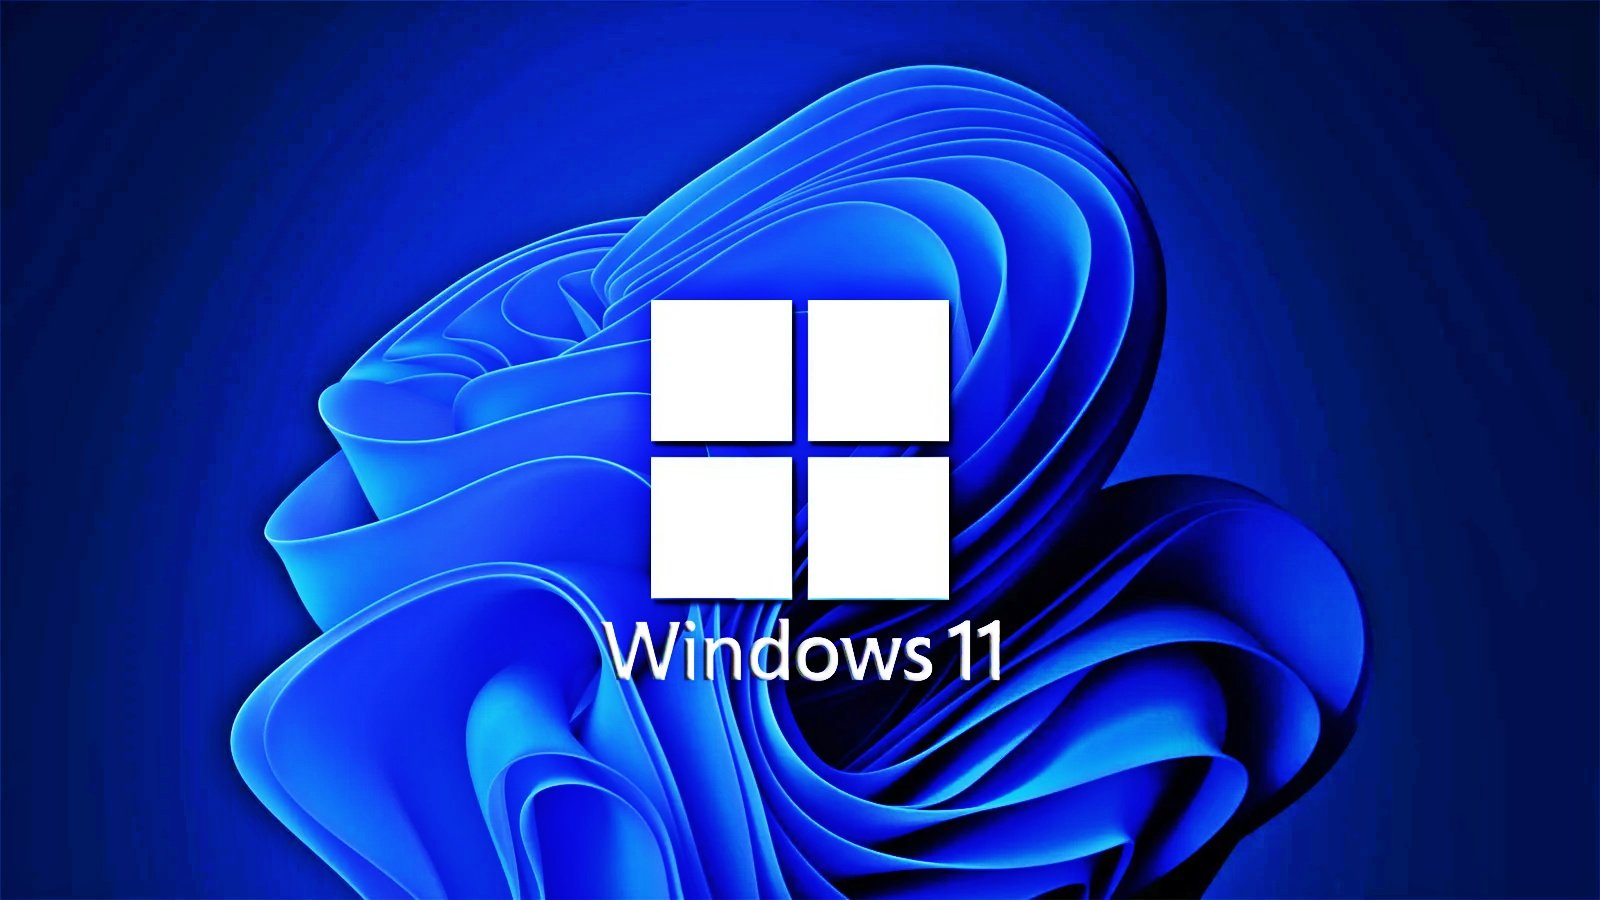 Windows 11 HDR